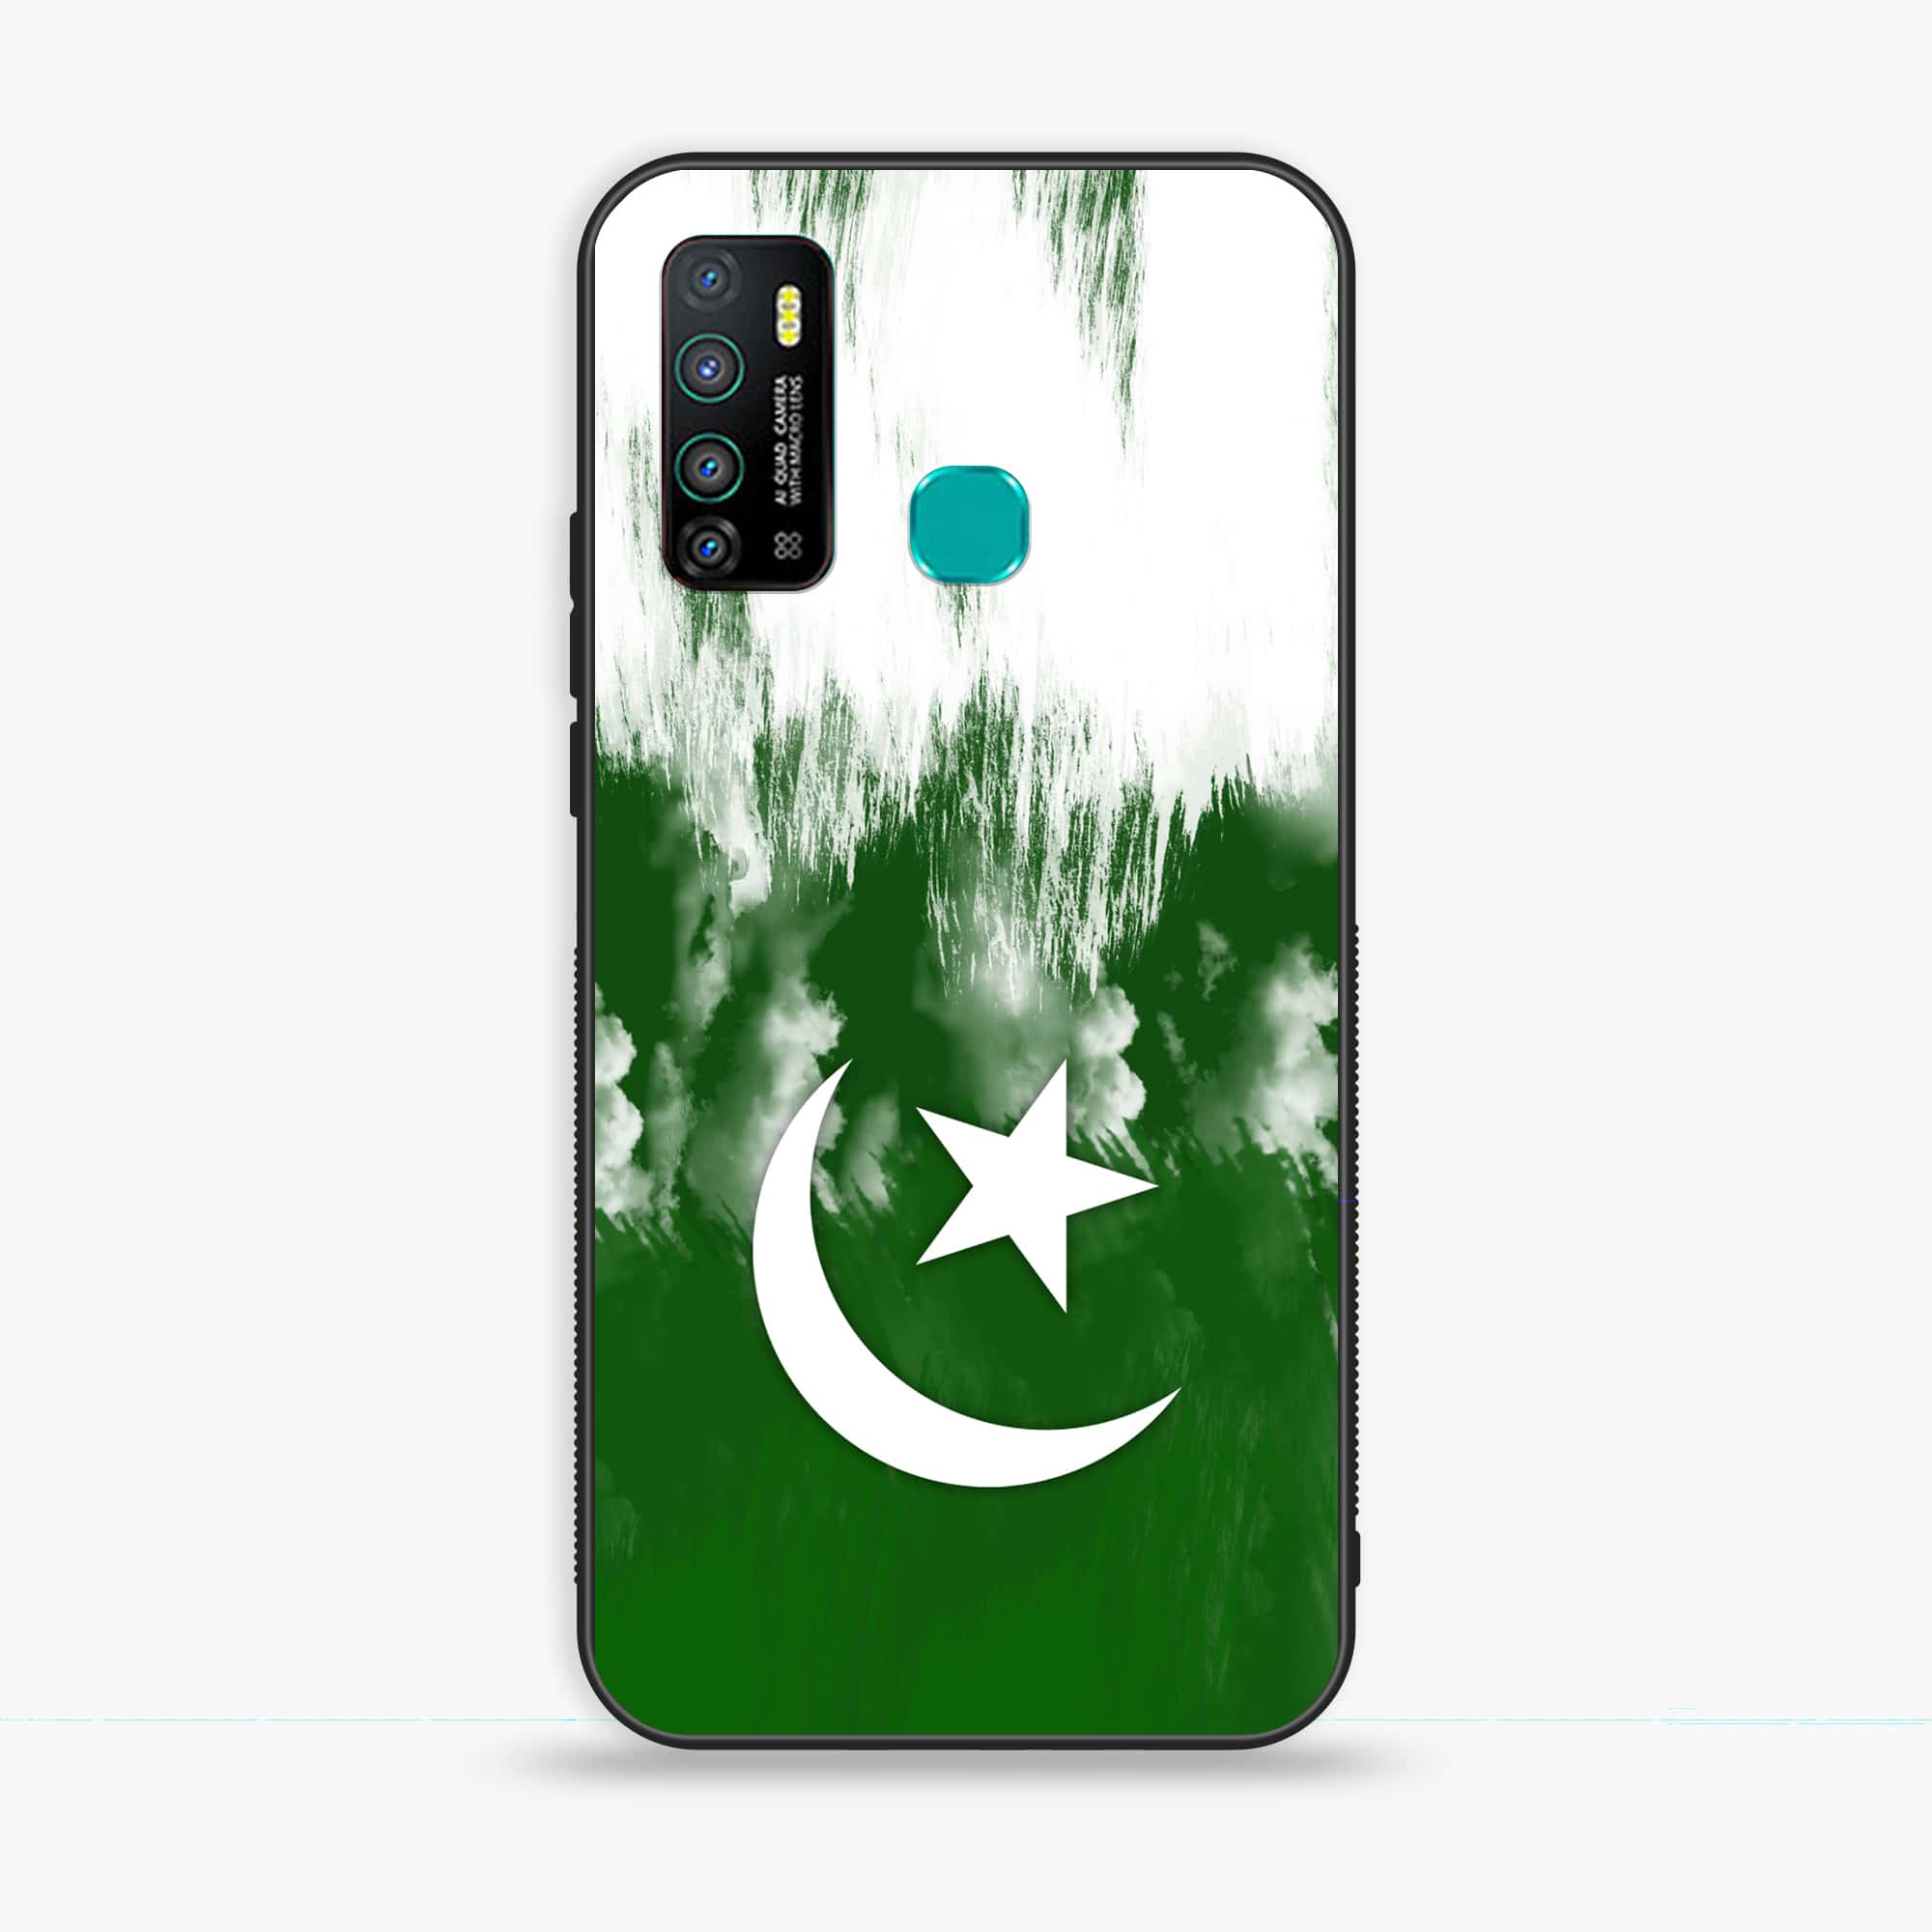 Infinix Hot 9 - Pakistani Flag Series - Premium Printed Glass soft Bumper shock Proof Case